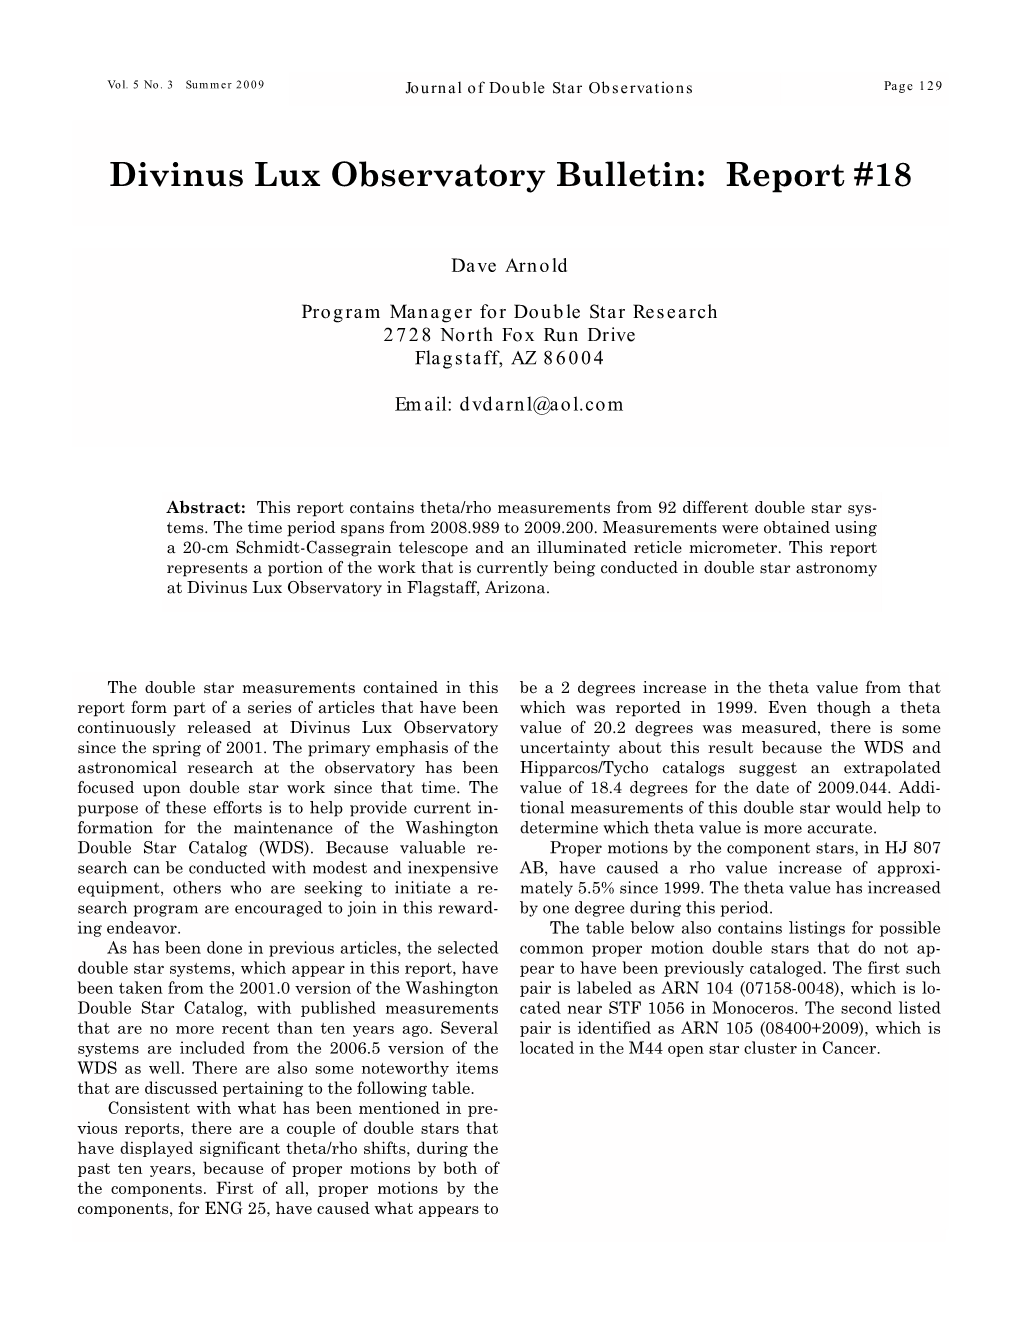 Divinus Lux Observatory Bulletin: Report #18